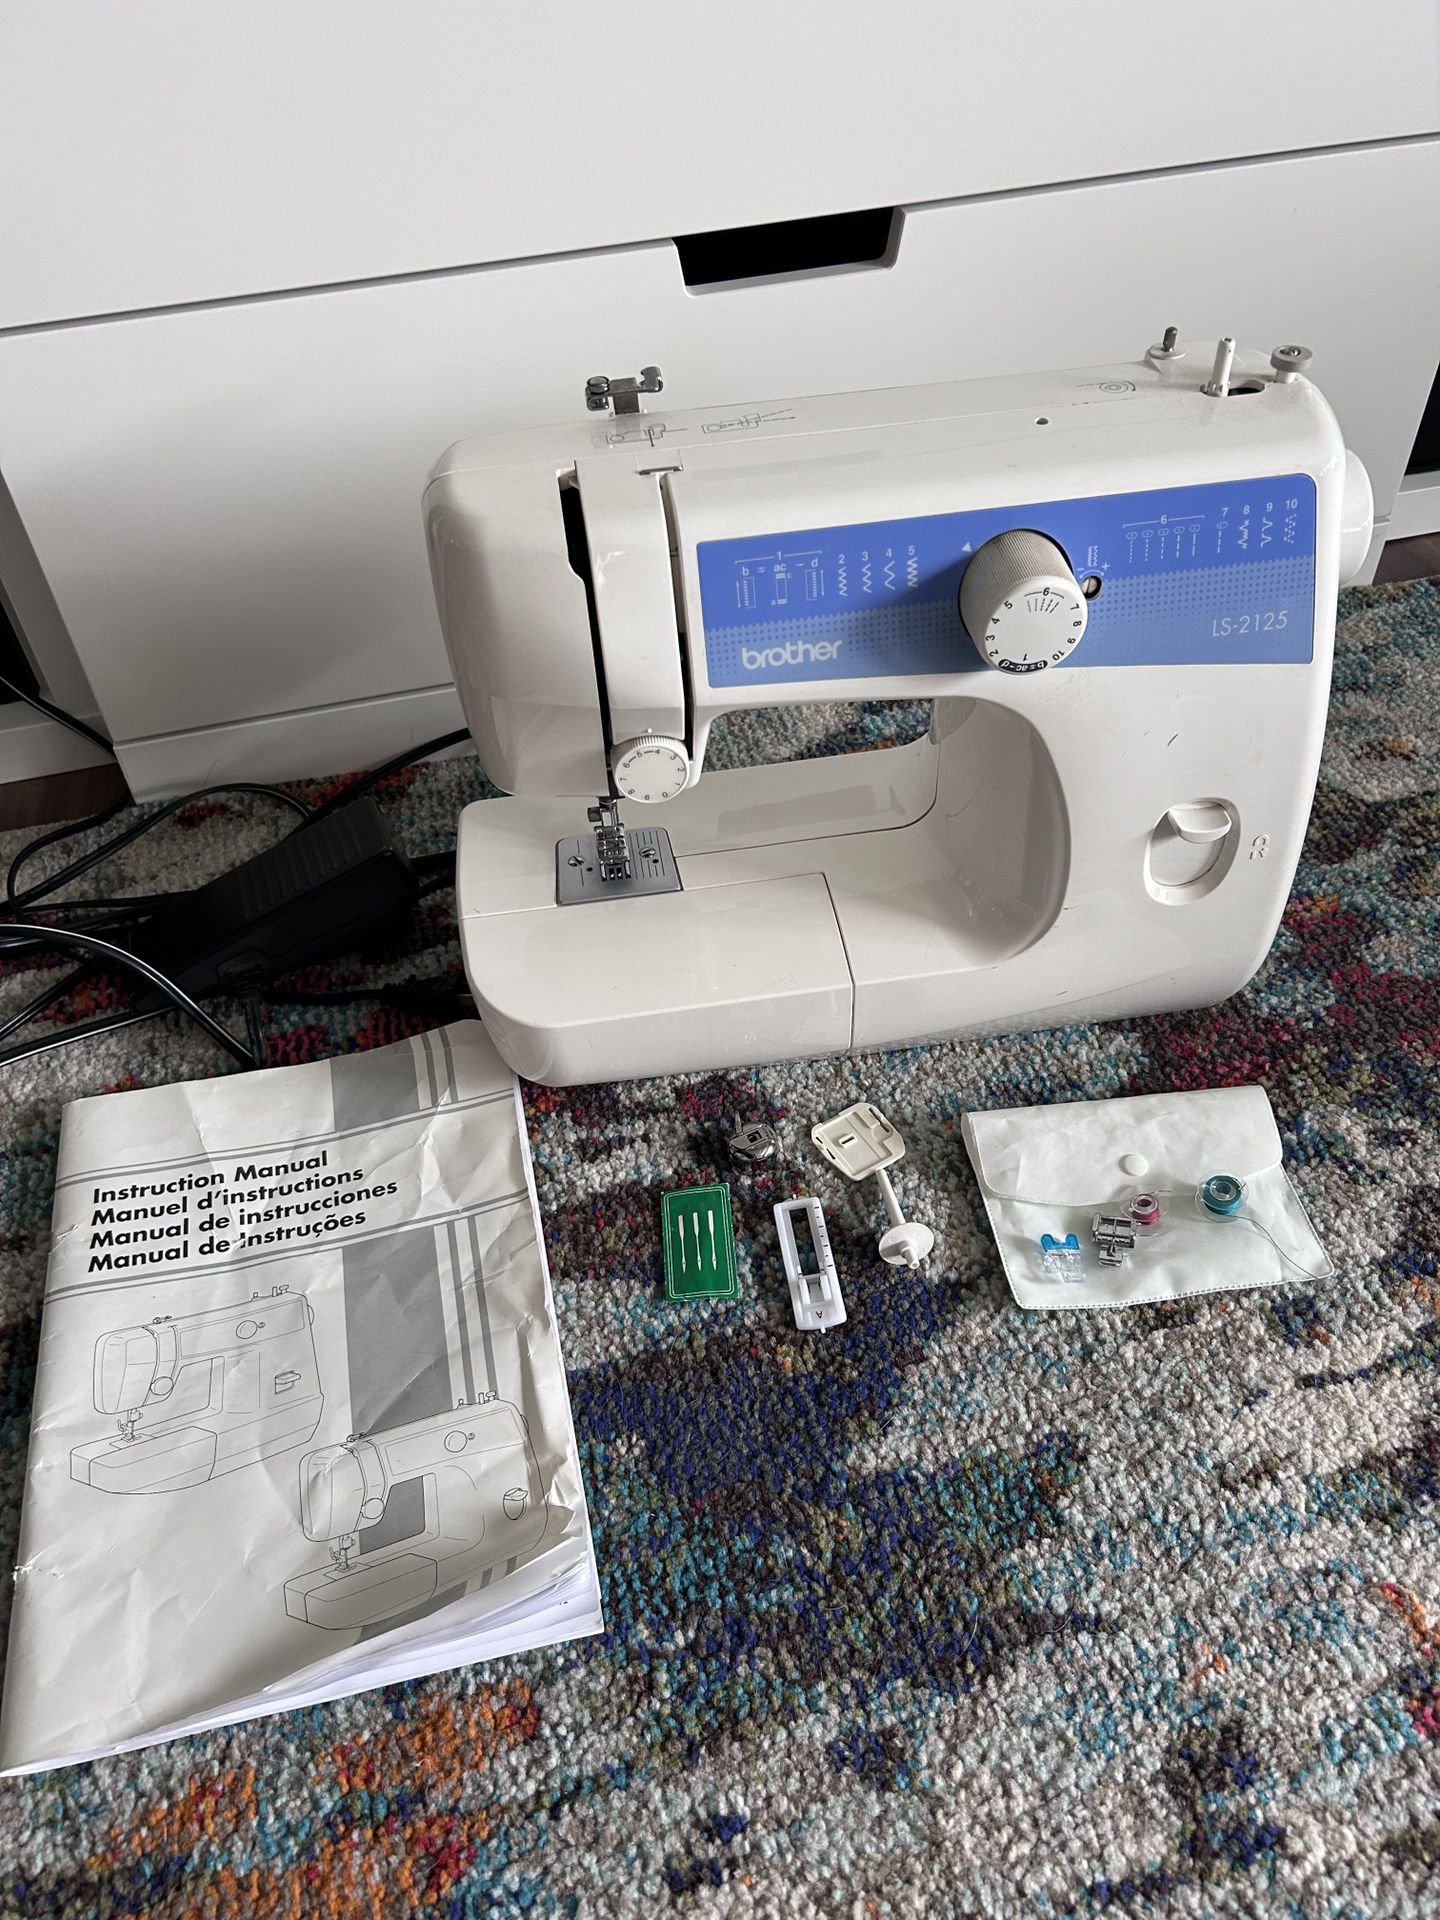 Brother Sewing Machine LS-2125 25 Stitch